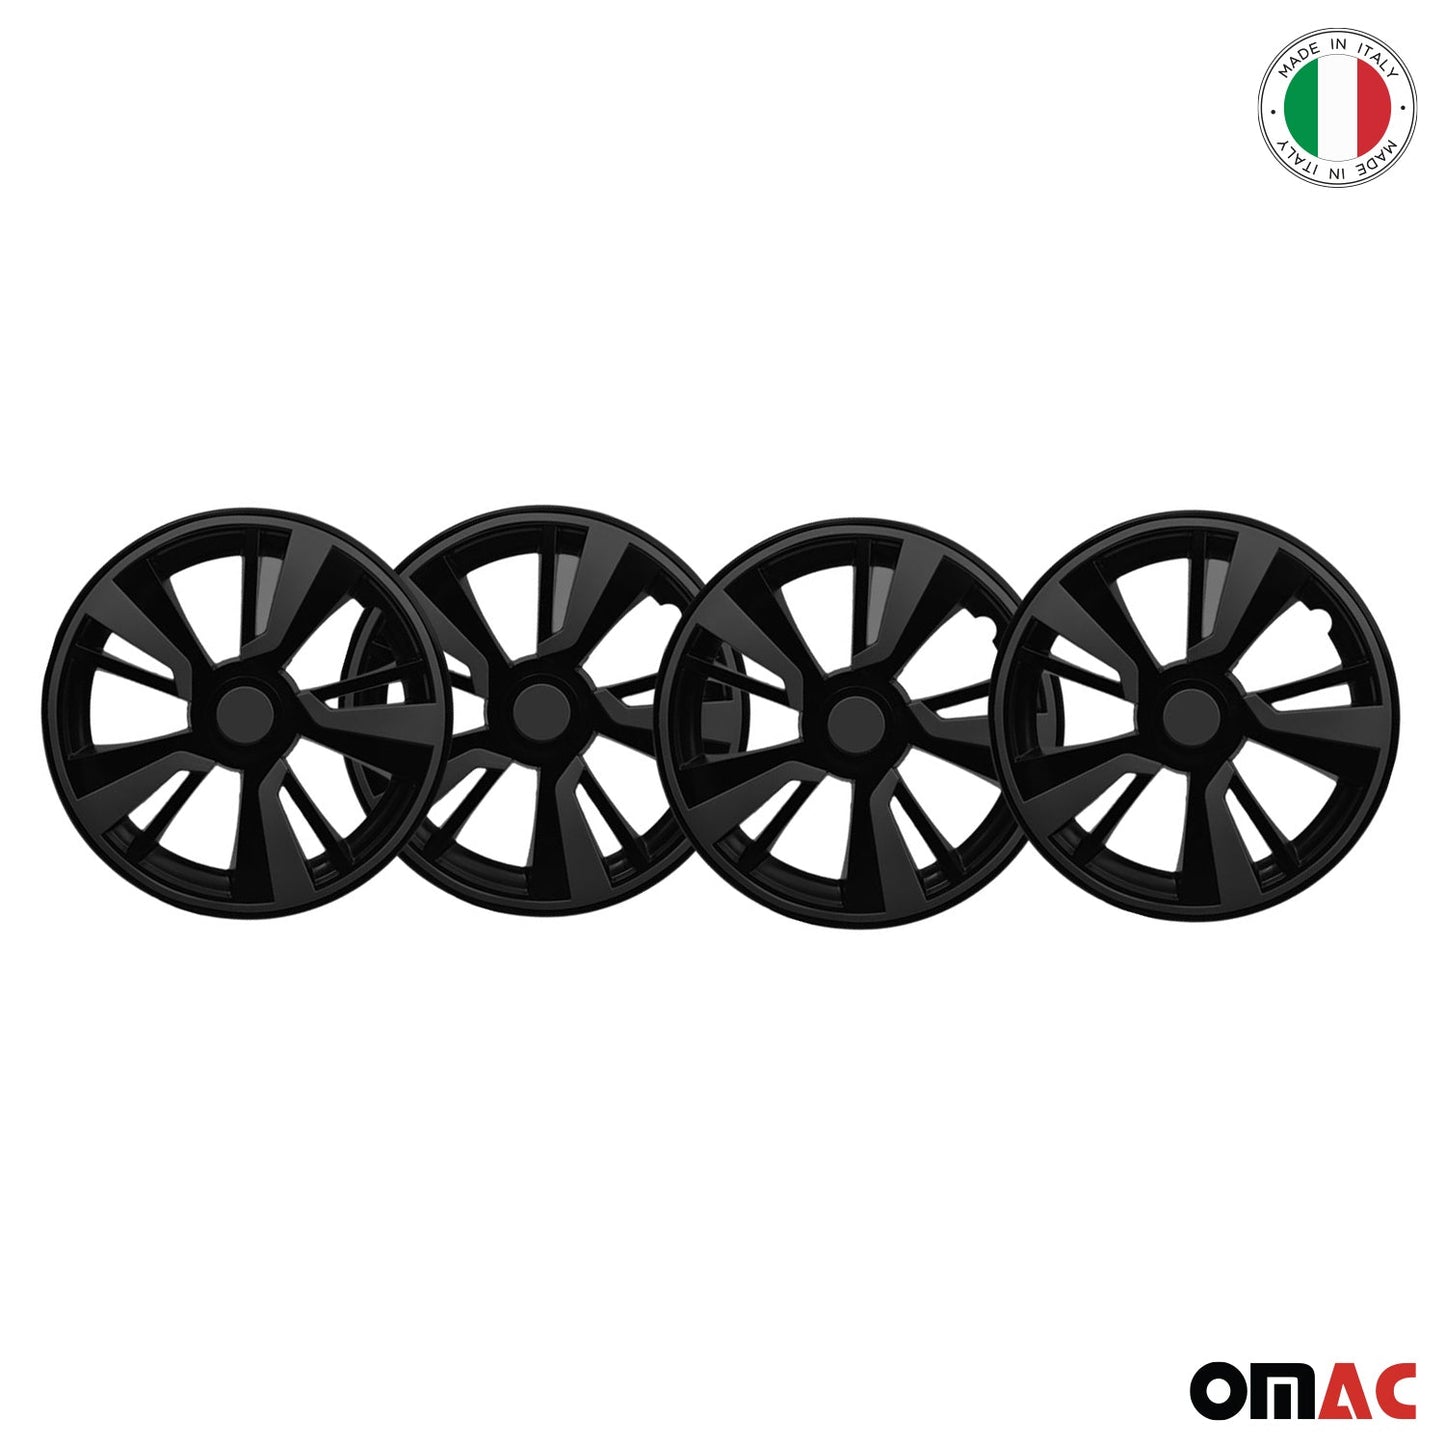 OMAC 15" Hubcaps Wheel Rim Cover Black with Dark Grey Insert 4pcs Set VRT99FR243B15DG